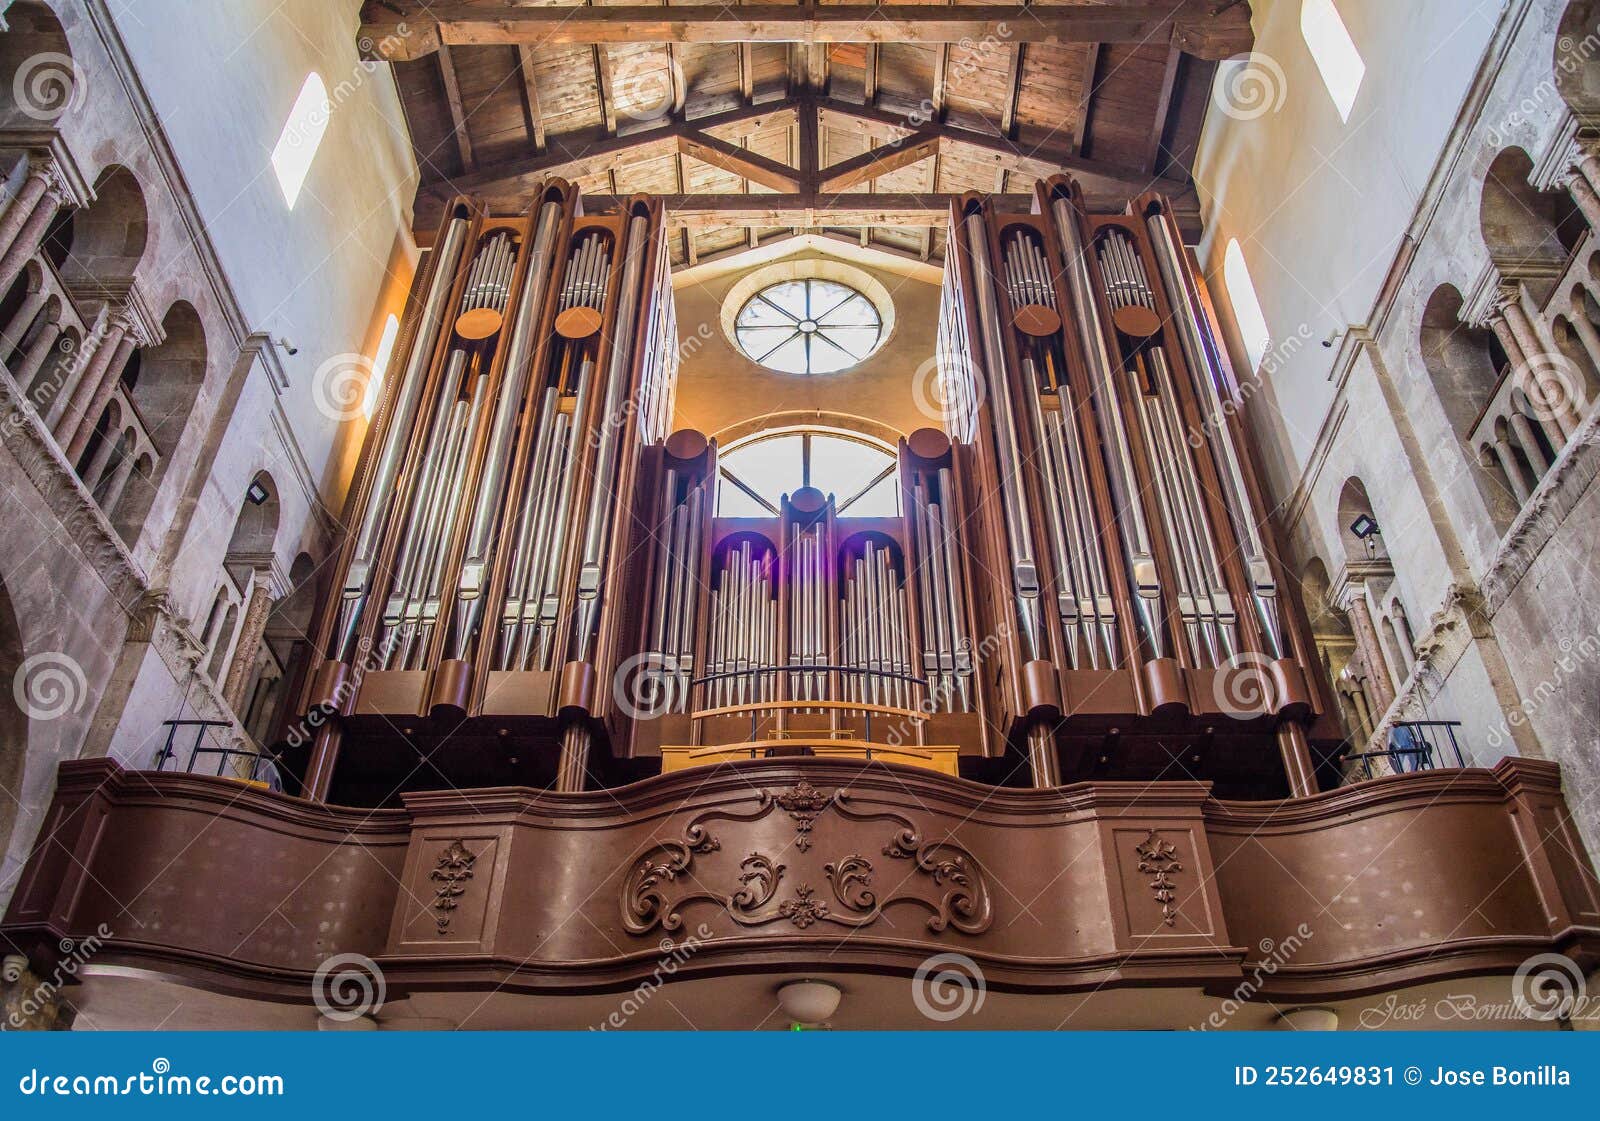 zadar. croacia. organ in cathedral. nice instrument.